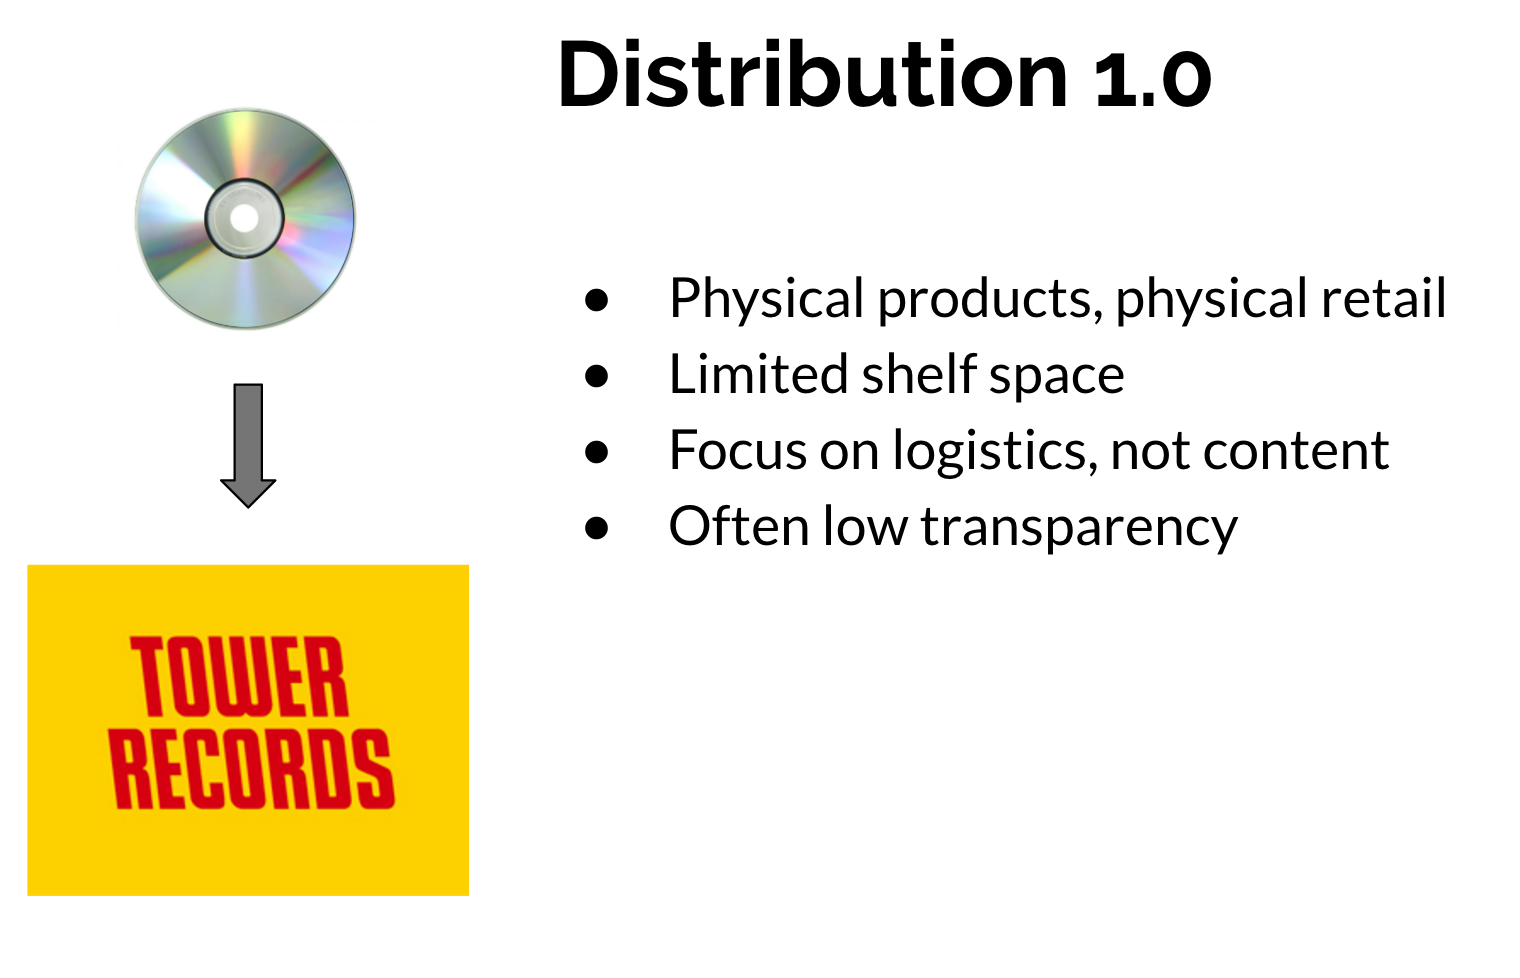 Distribution 1.0.png